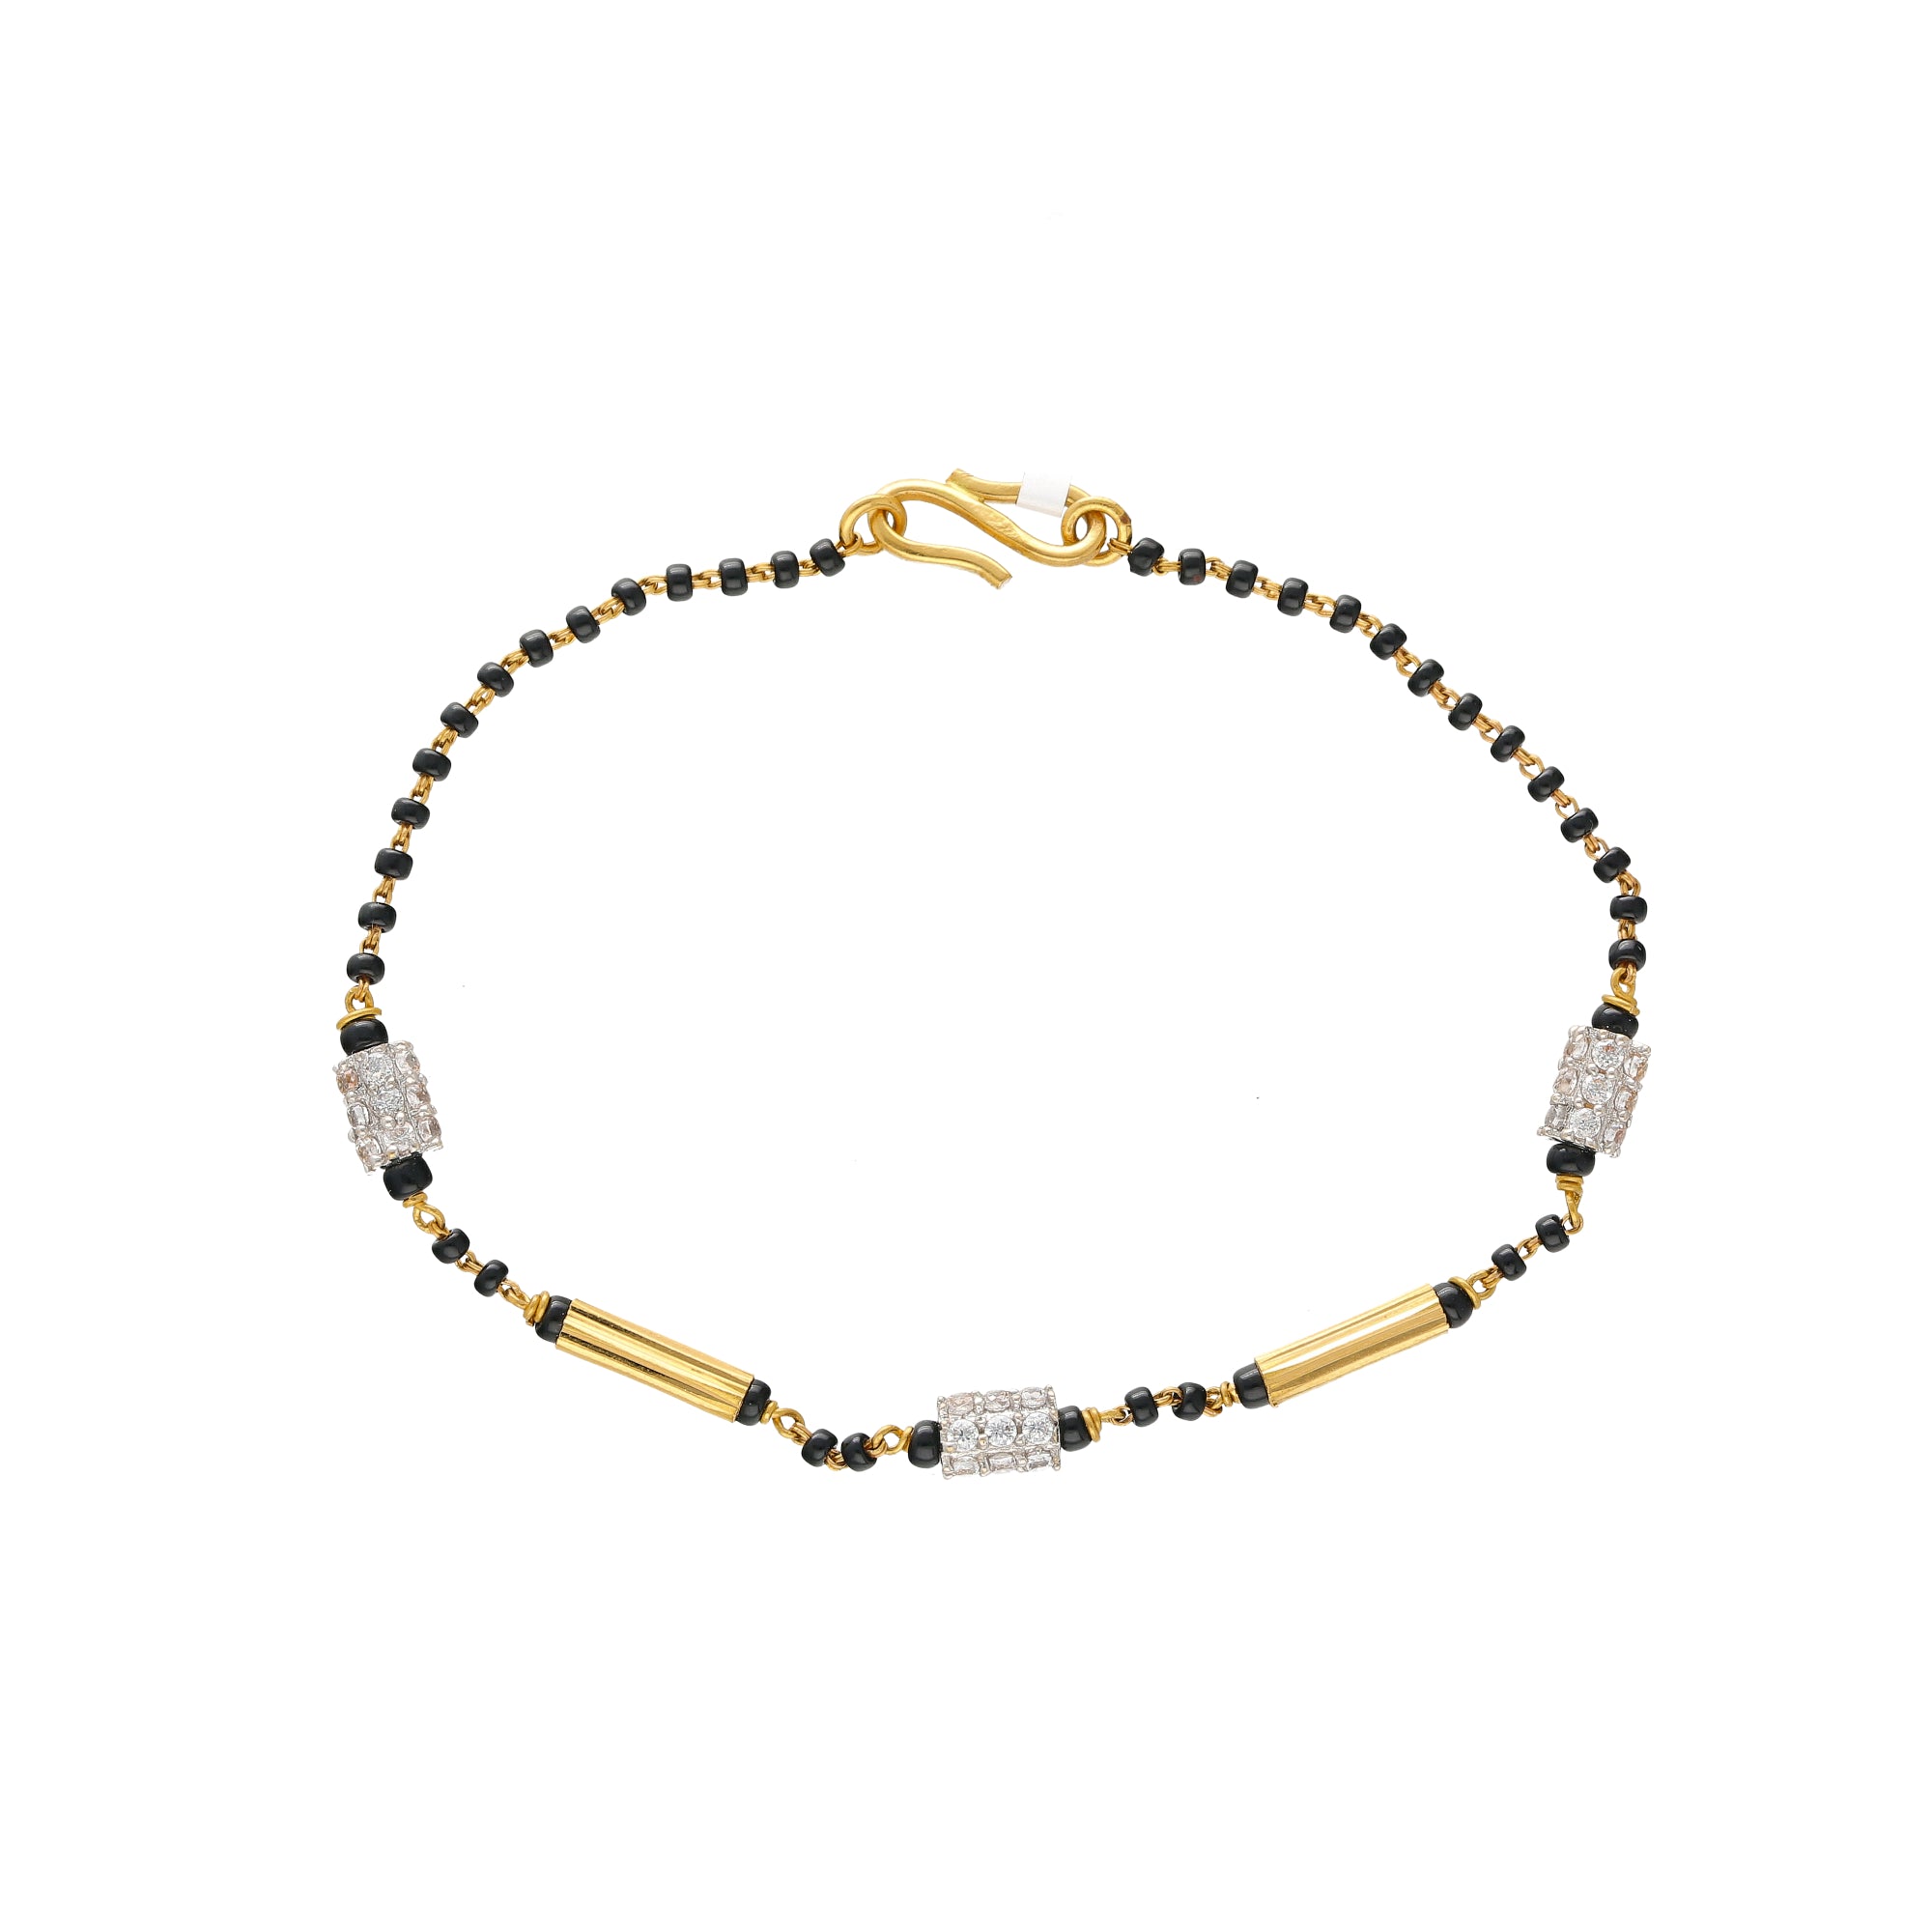 22K Gold Bracelet for Women with Cz & Black Beads - 235-GBR2909 in 3.400  Grams